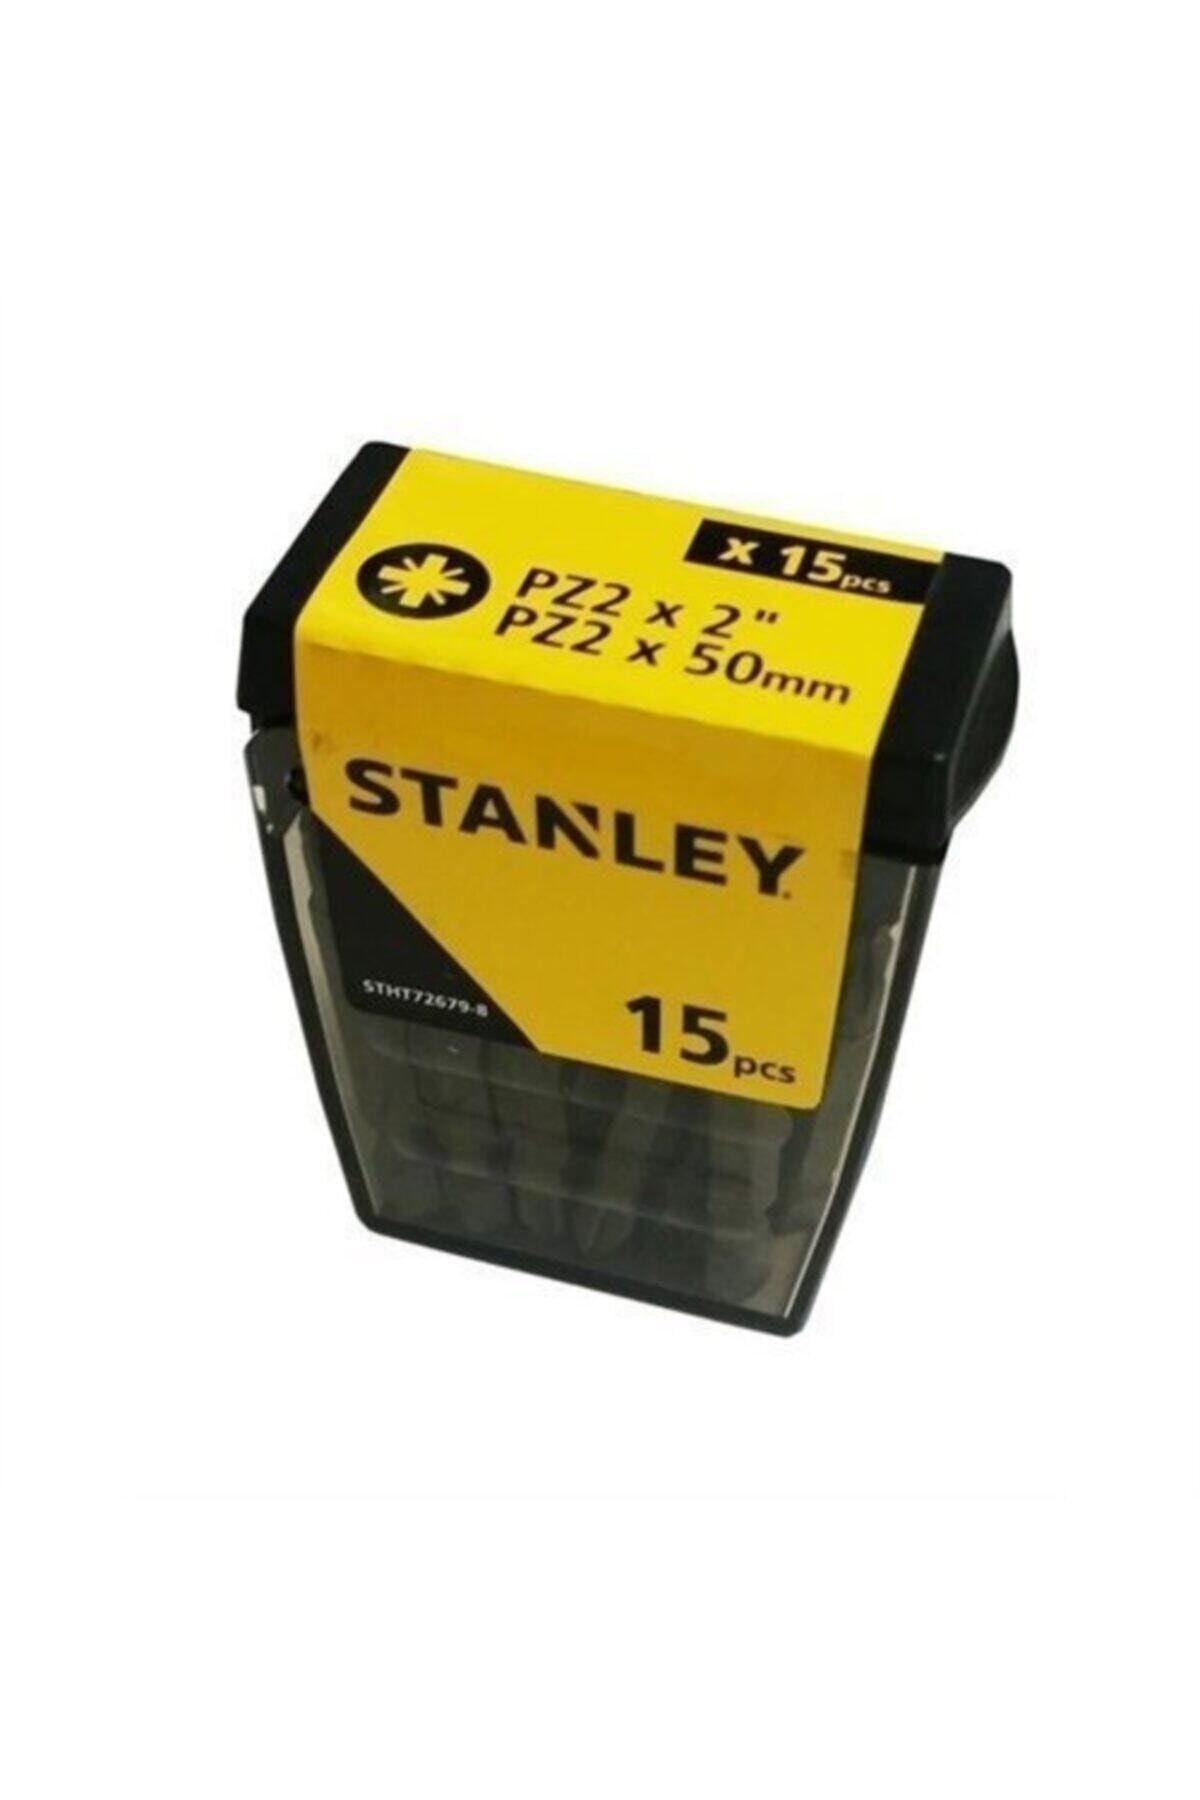 Stanley 15 Adet Pz2 X 50mm Vidalama Bits Uç Seti